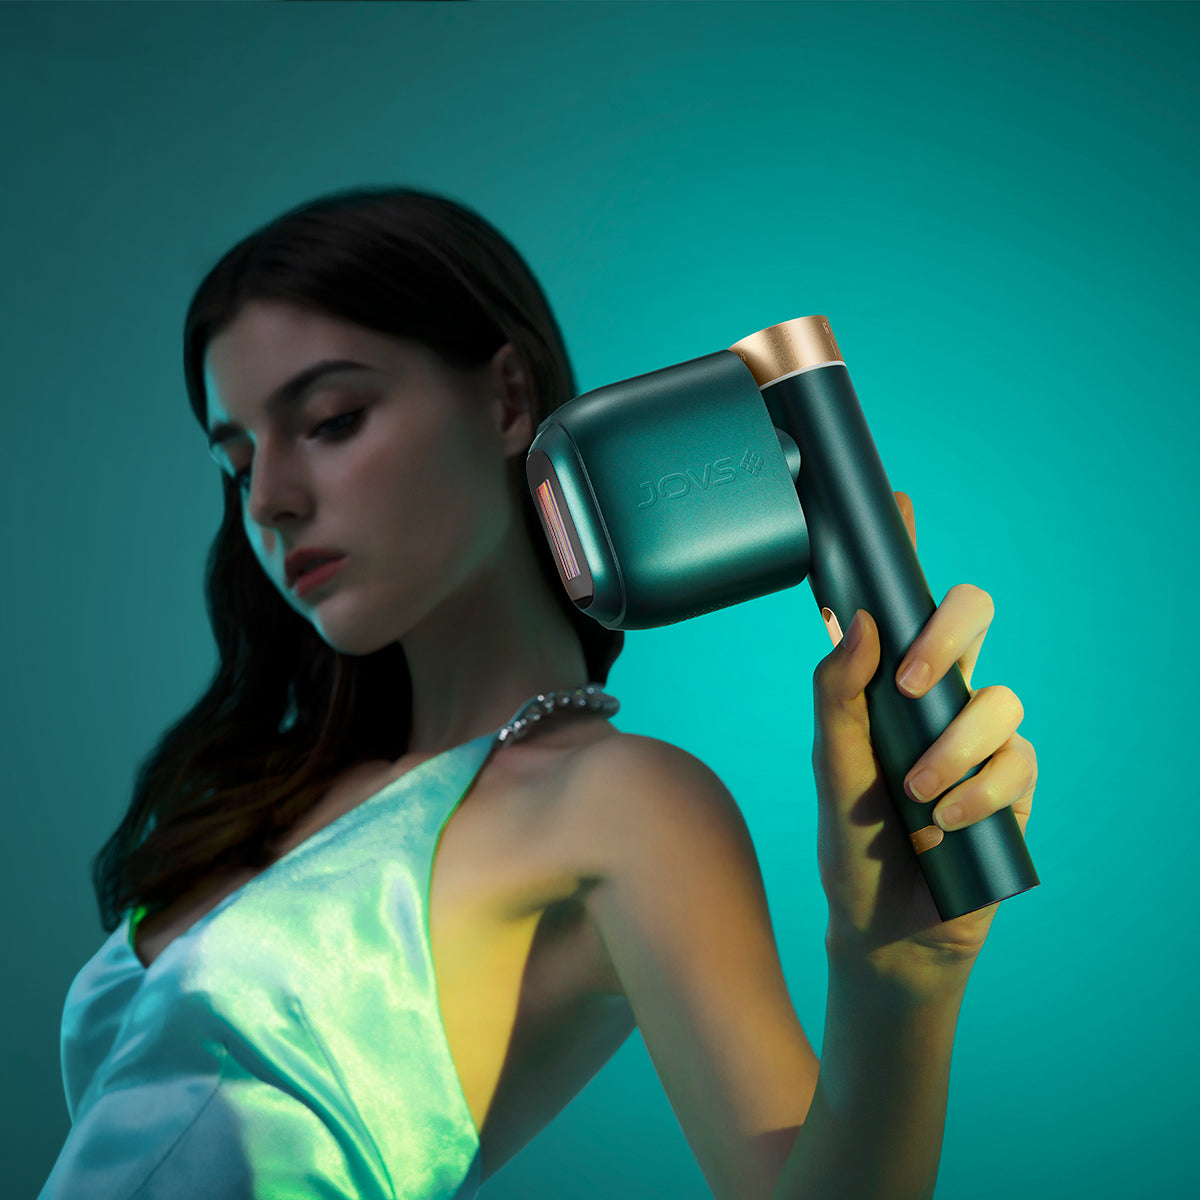 Model gracefully demonstrating the JOVS Venus Pro II hair removal device, showcasing sleek design and effectiveness.